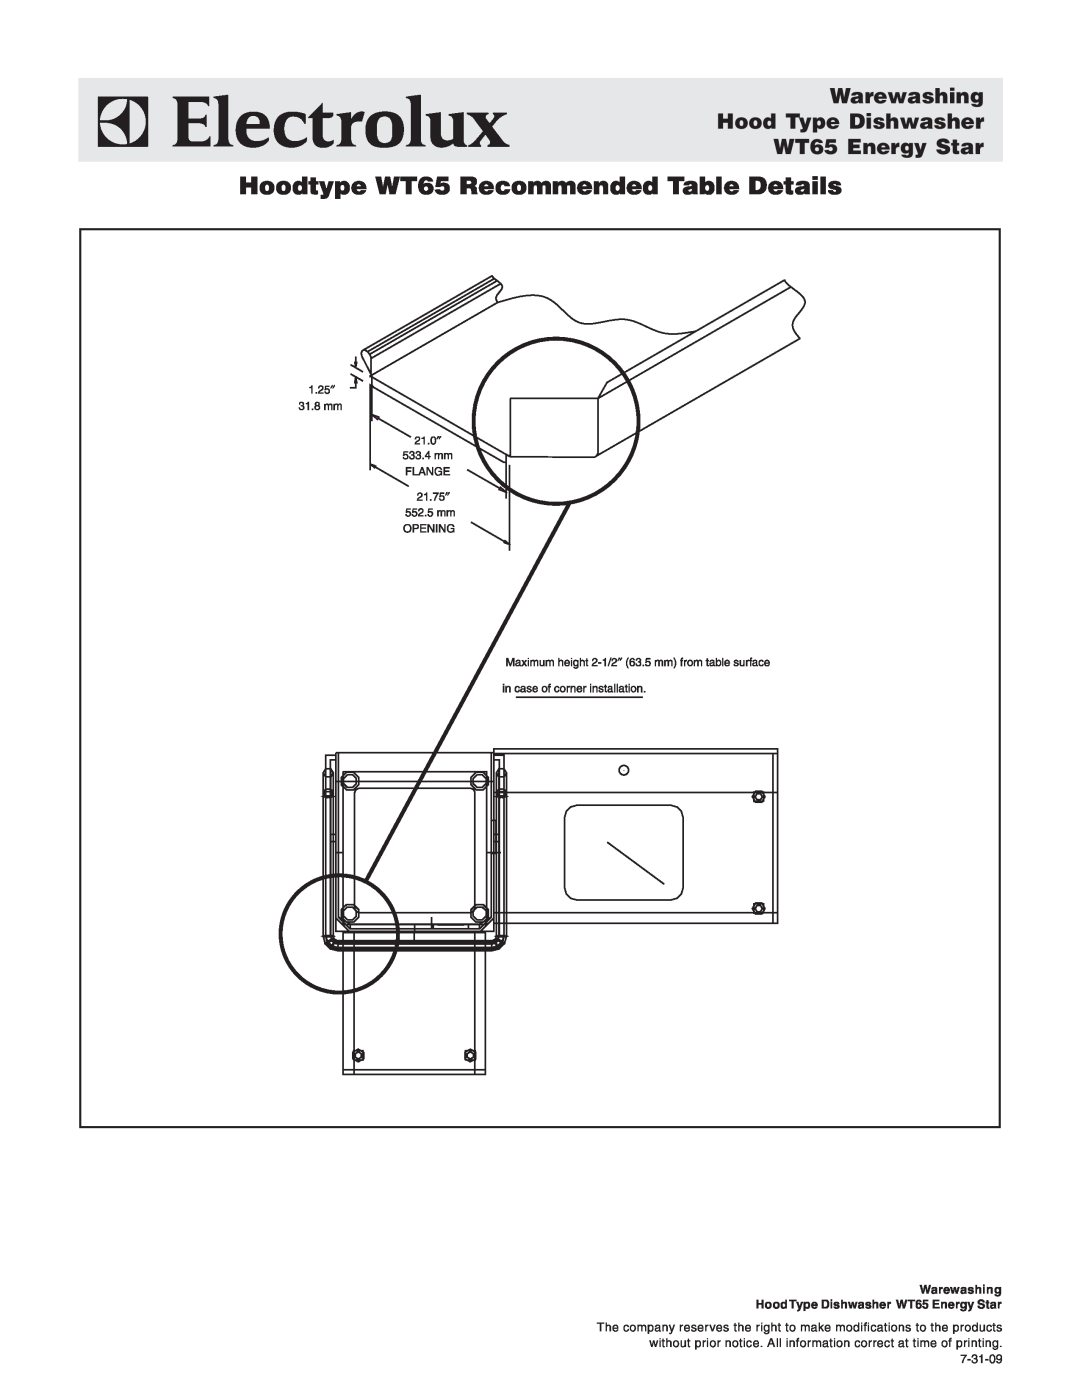 Electrolux 3048424 Hoodtype WT65 Recommended Table Details, Warewashing Hood Type Dishwasher WT65 Energy Star, 7-31-09 